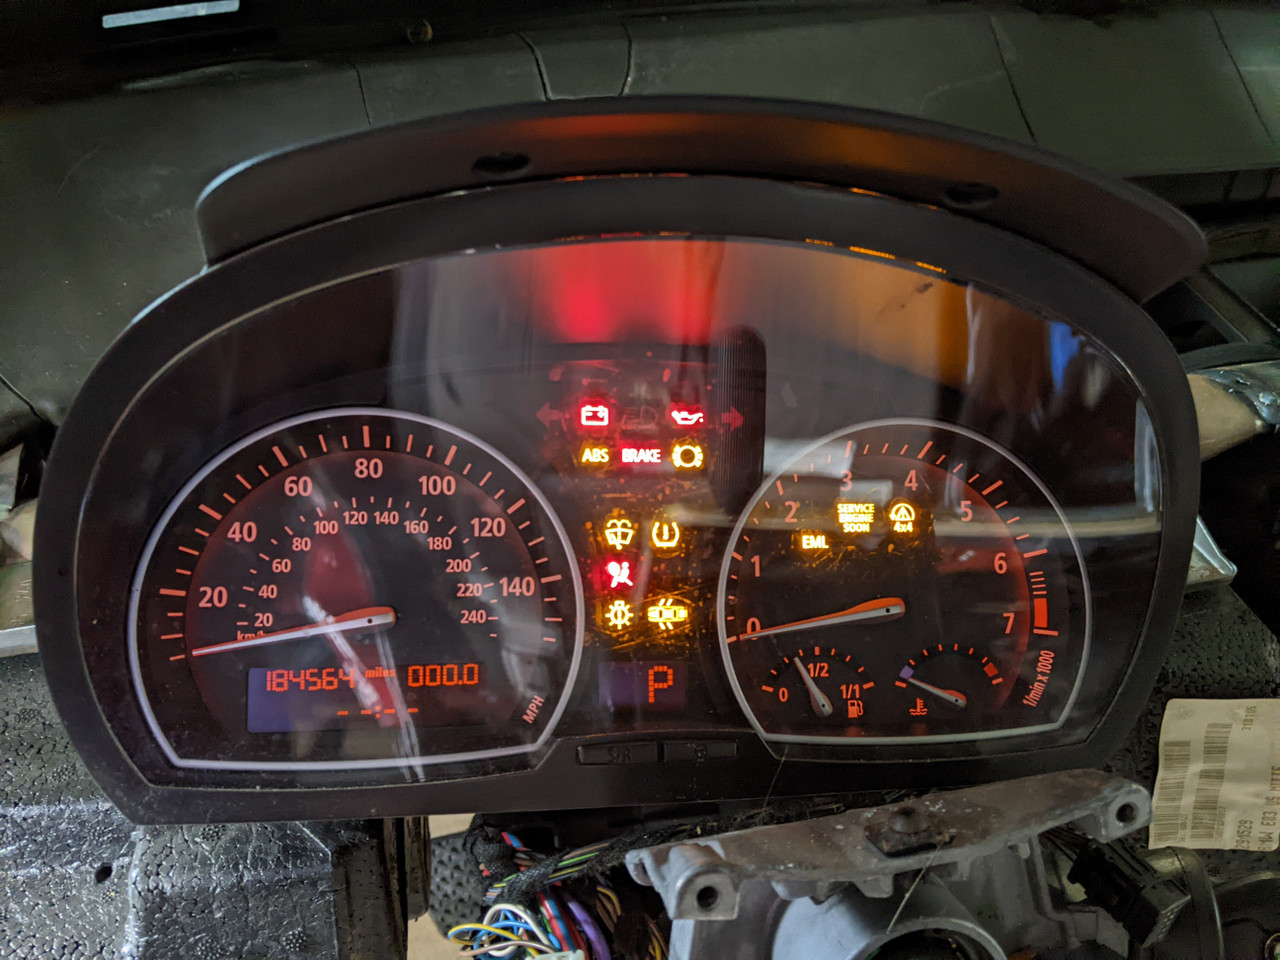 BMW E83 X3 Instrument Cluster Speedometer Odometer 62113414378